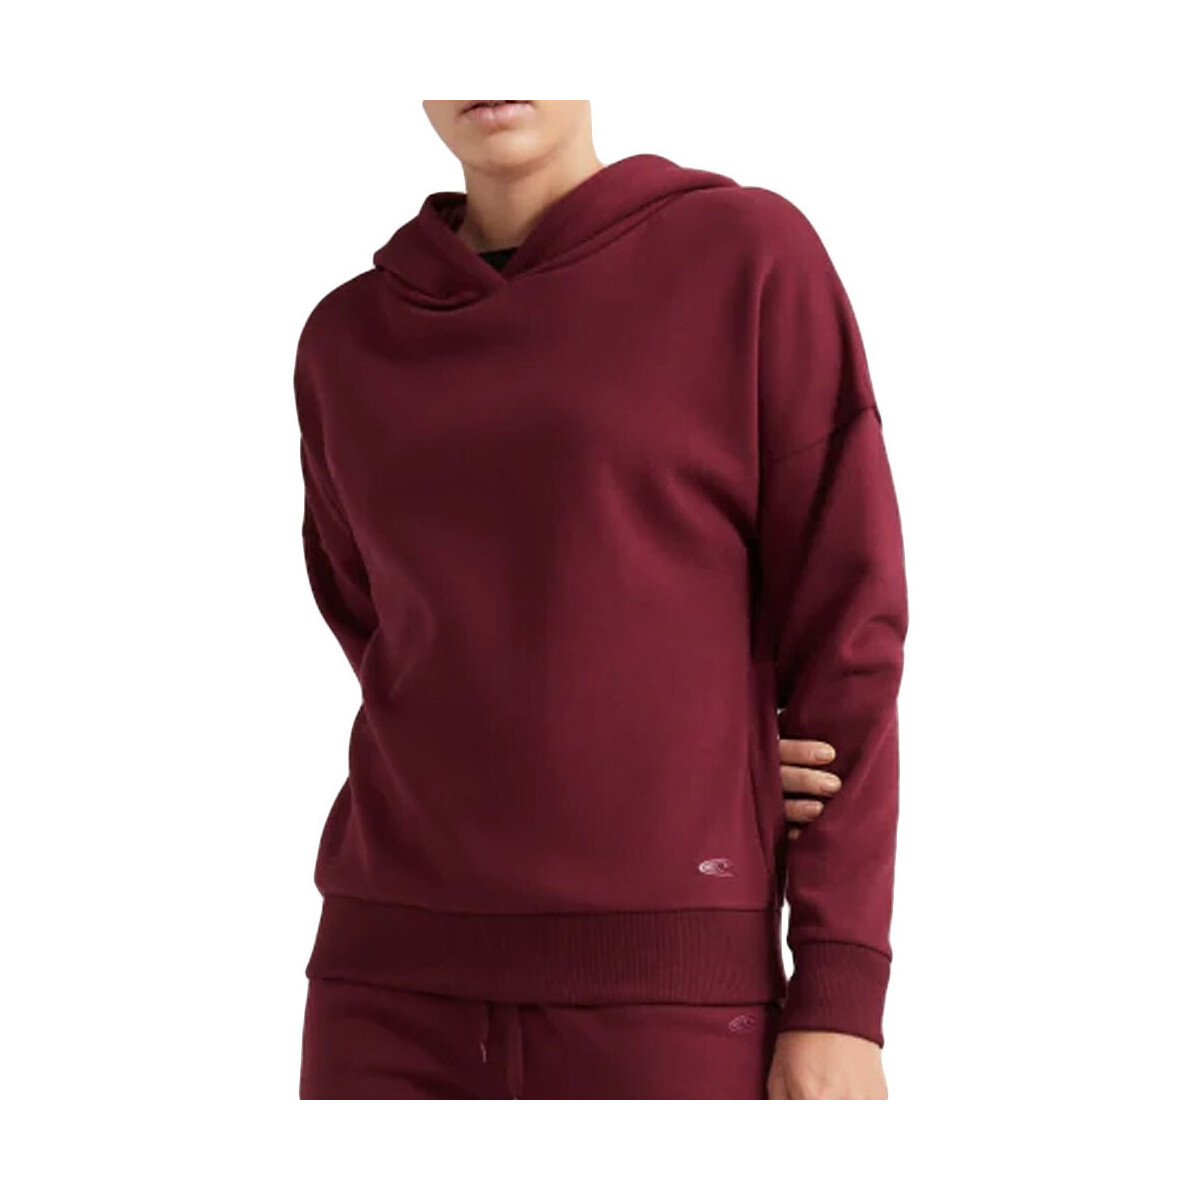 Textiel Dames Sweaters / Sweatshirts O'neill  Rood